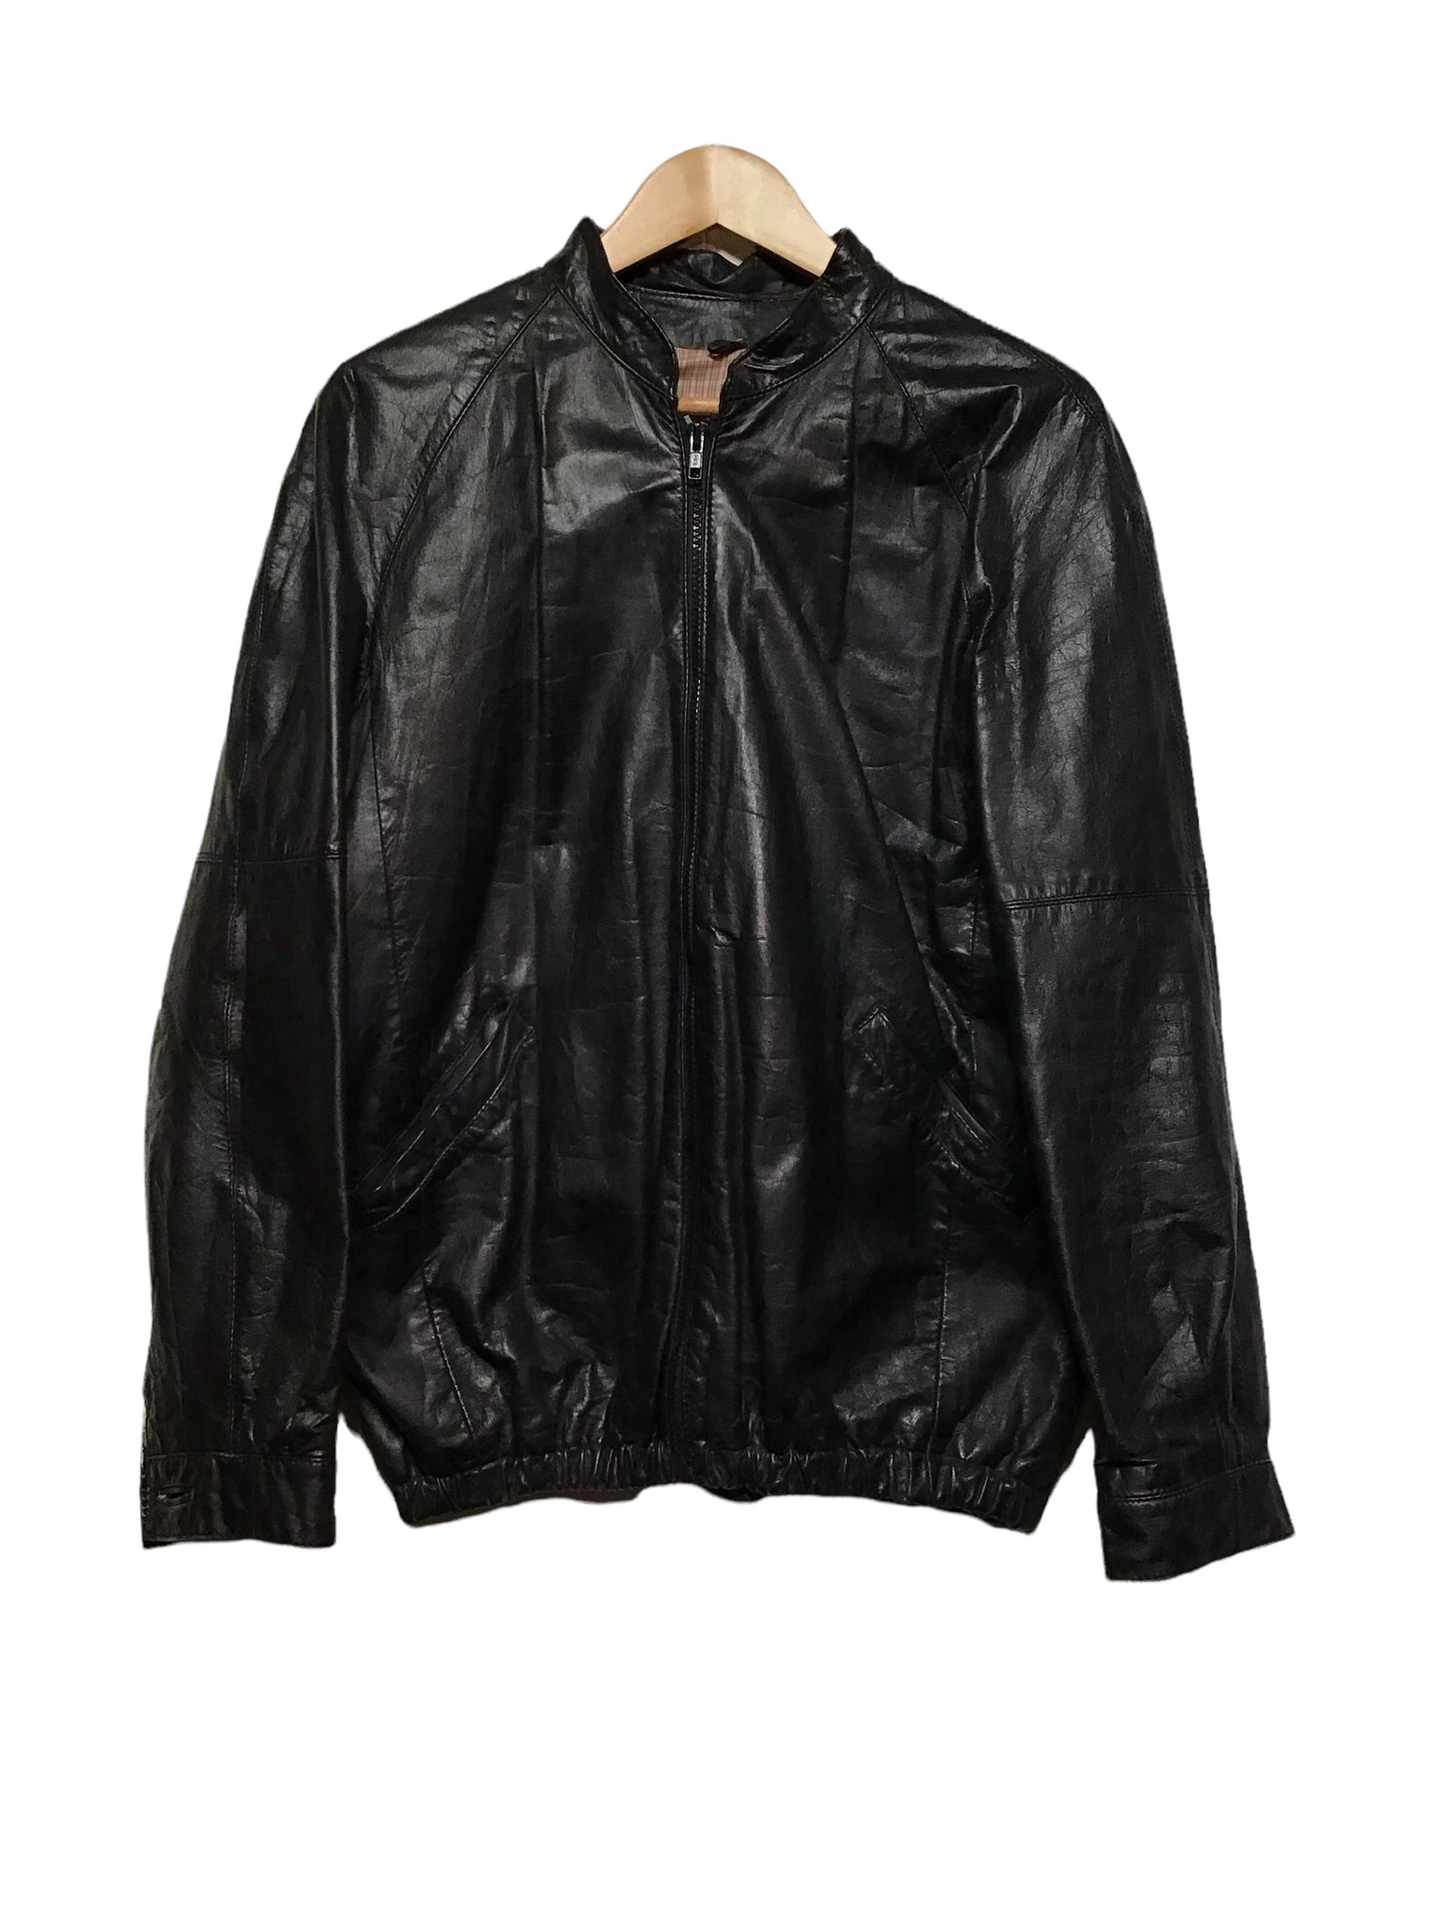 Black Leather Bomber Jacket (Size L)